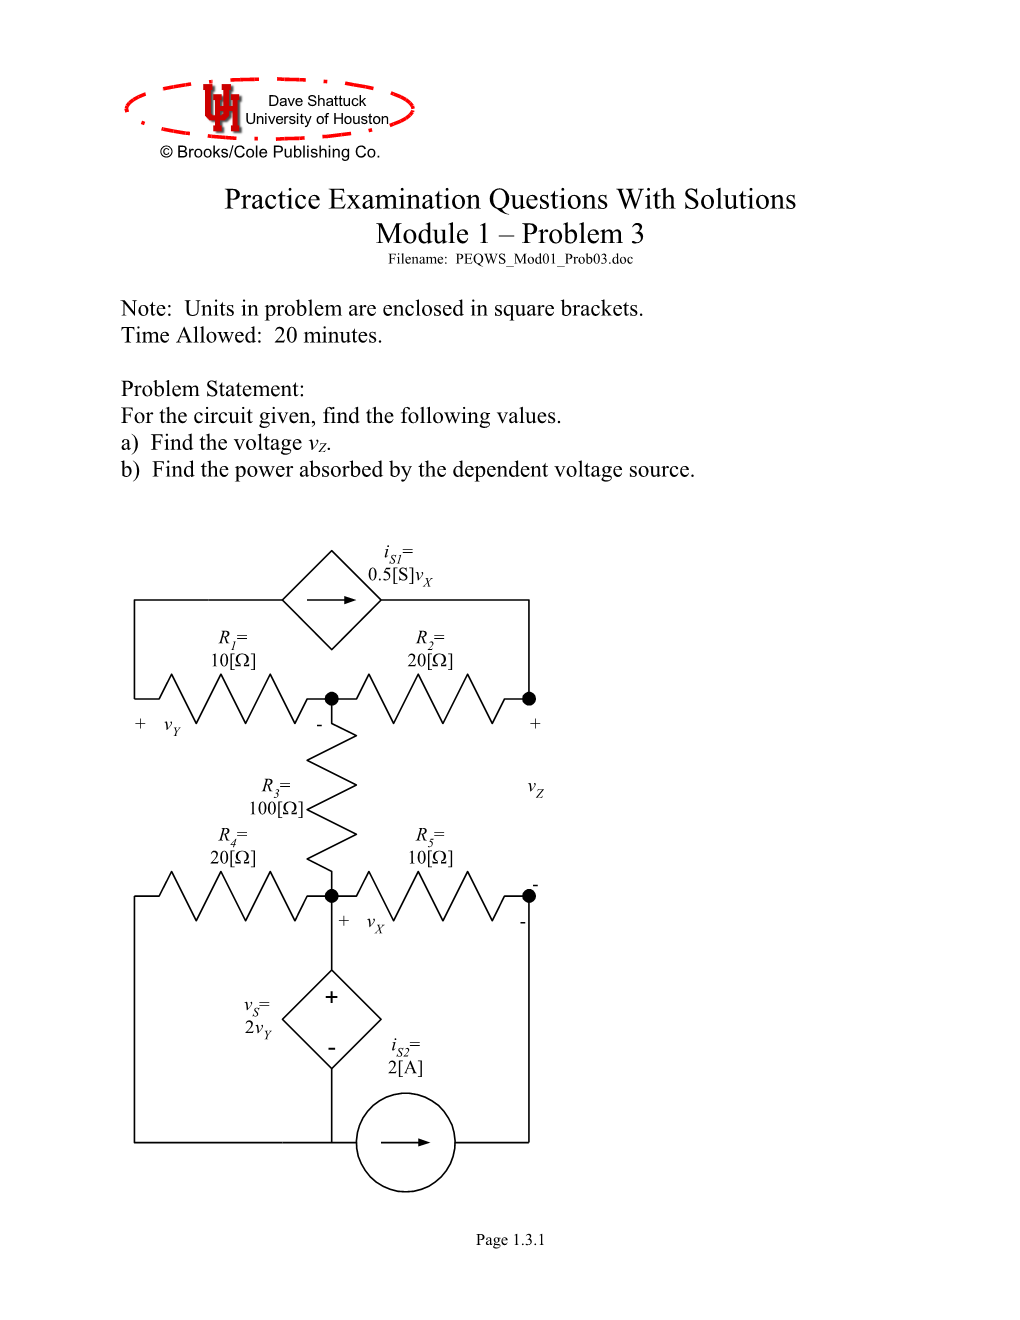 Practice Examination Module 1 Problem 3